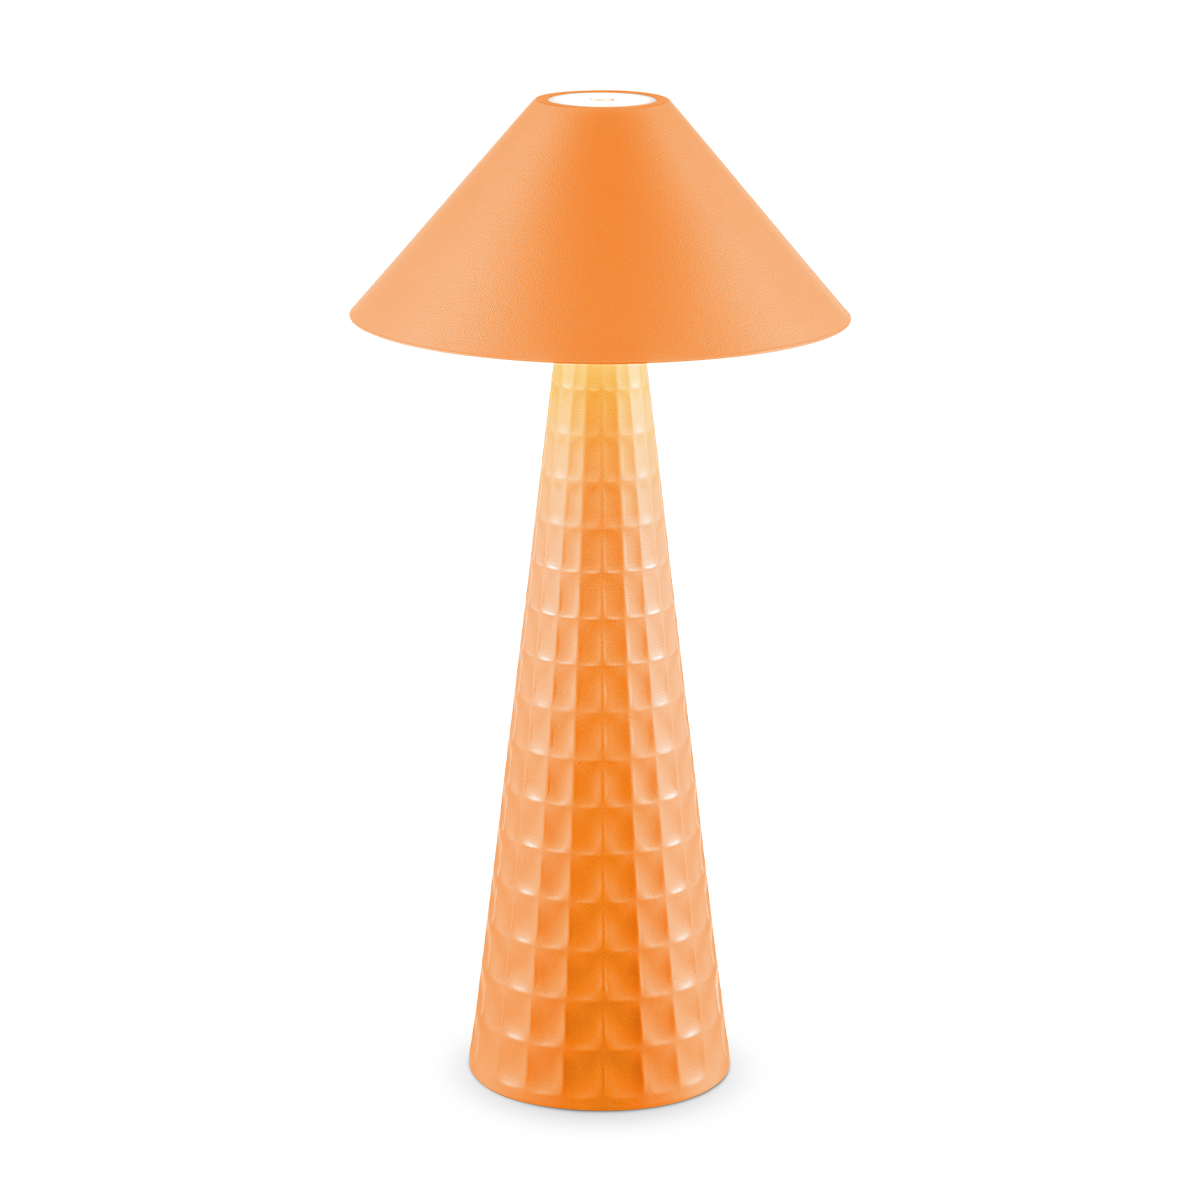 Tangla lighting - TLT7645-01OG - LED table lamp - rechargeable plastic and metal - orange - mushroom